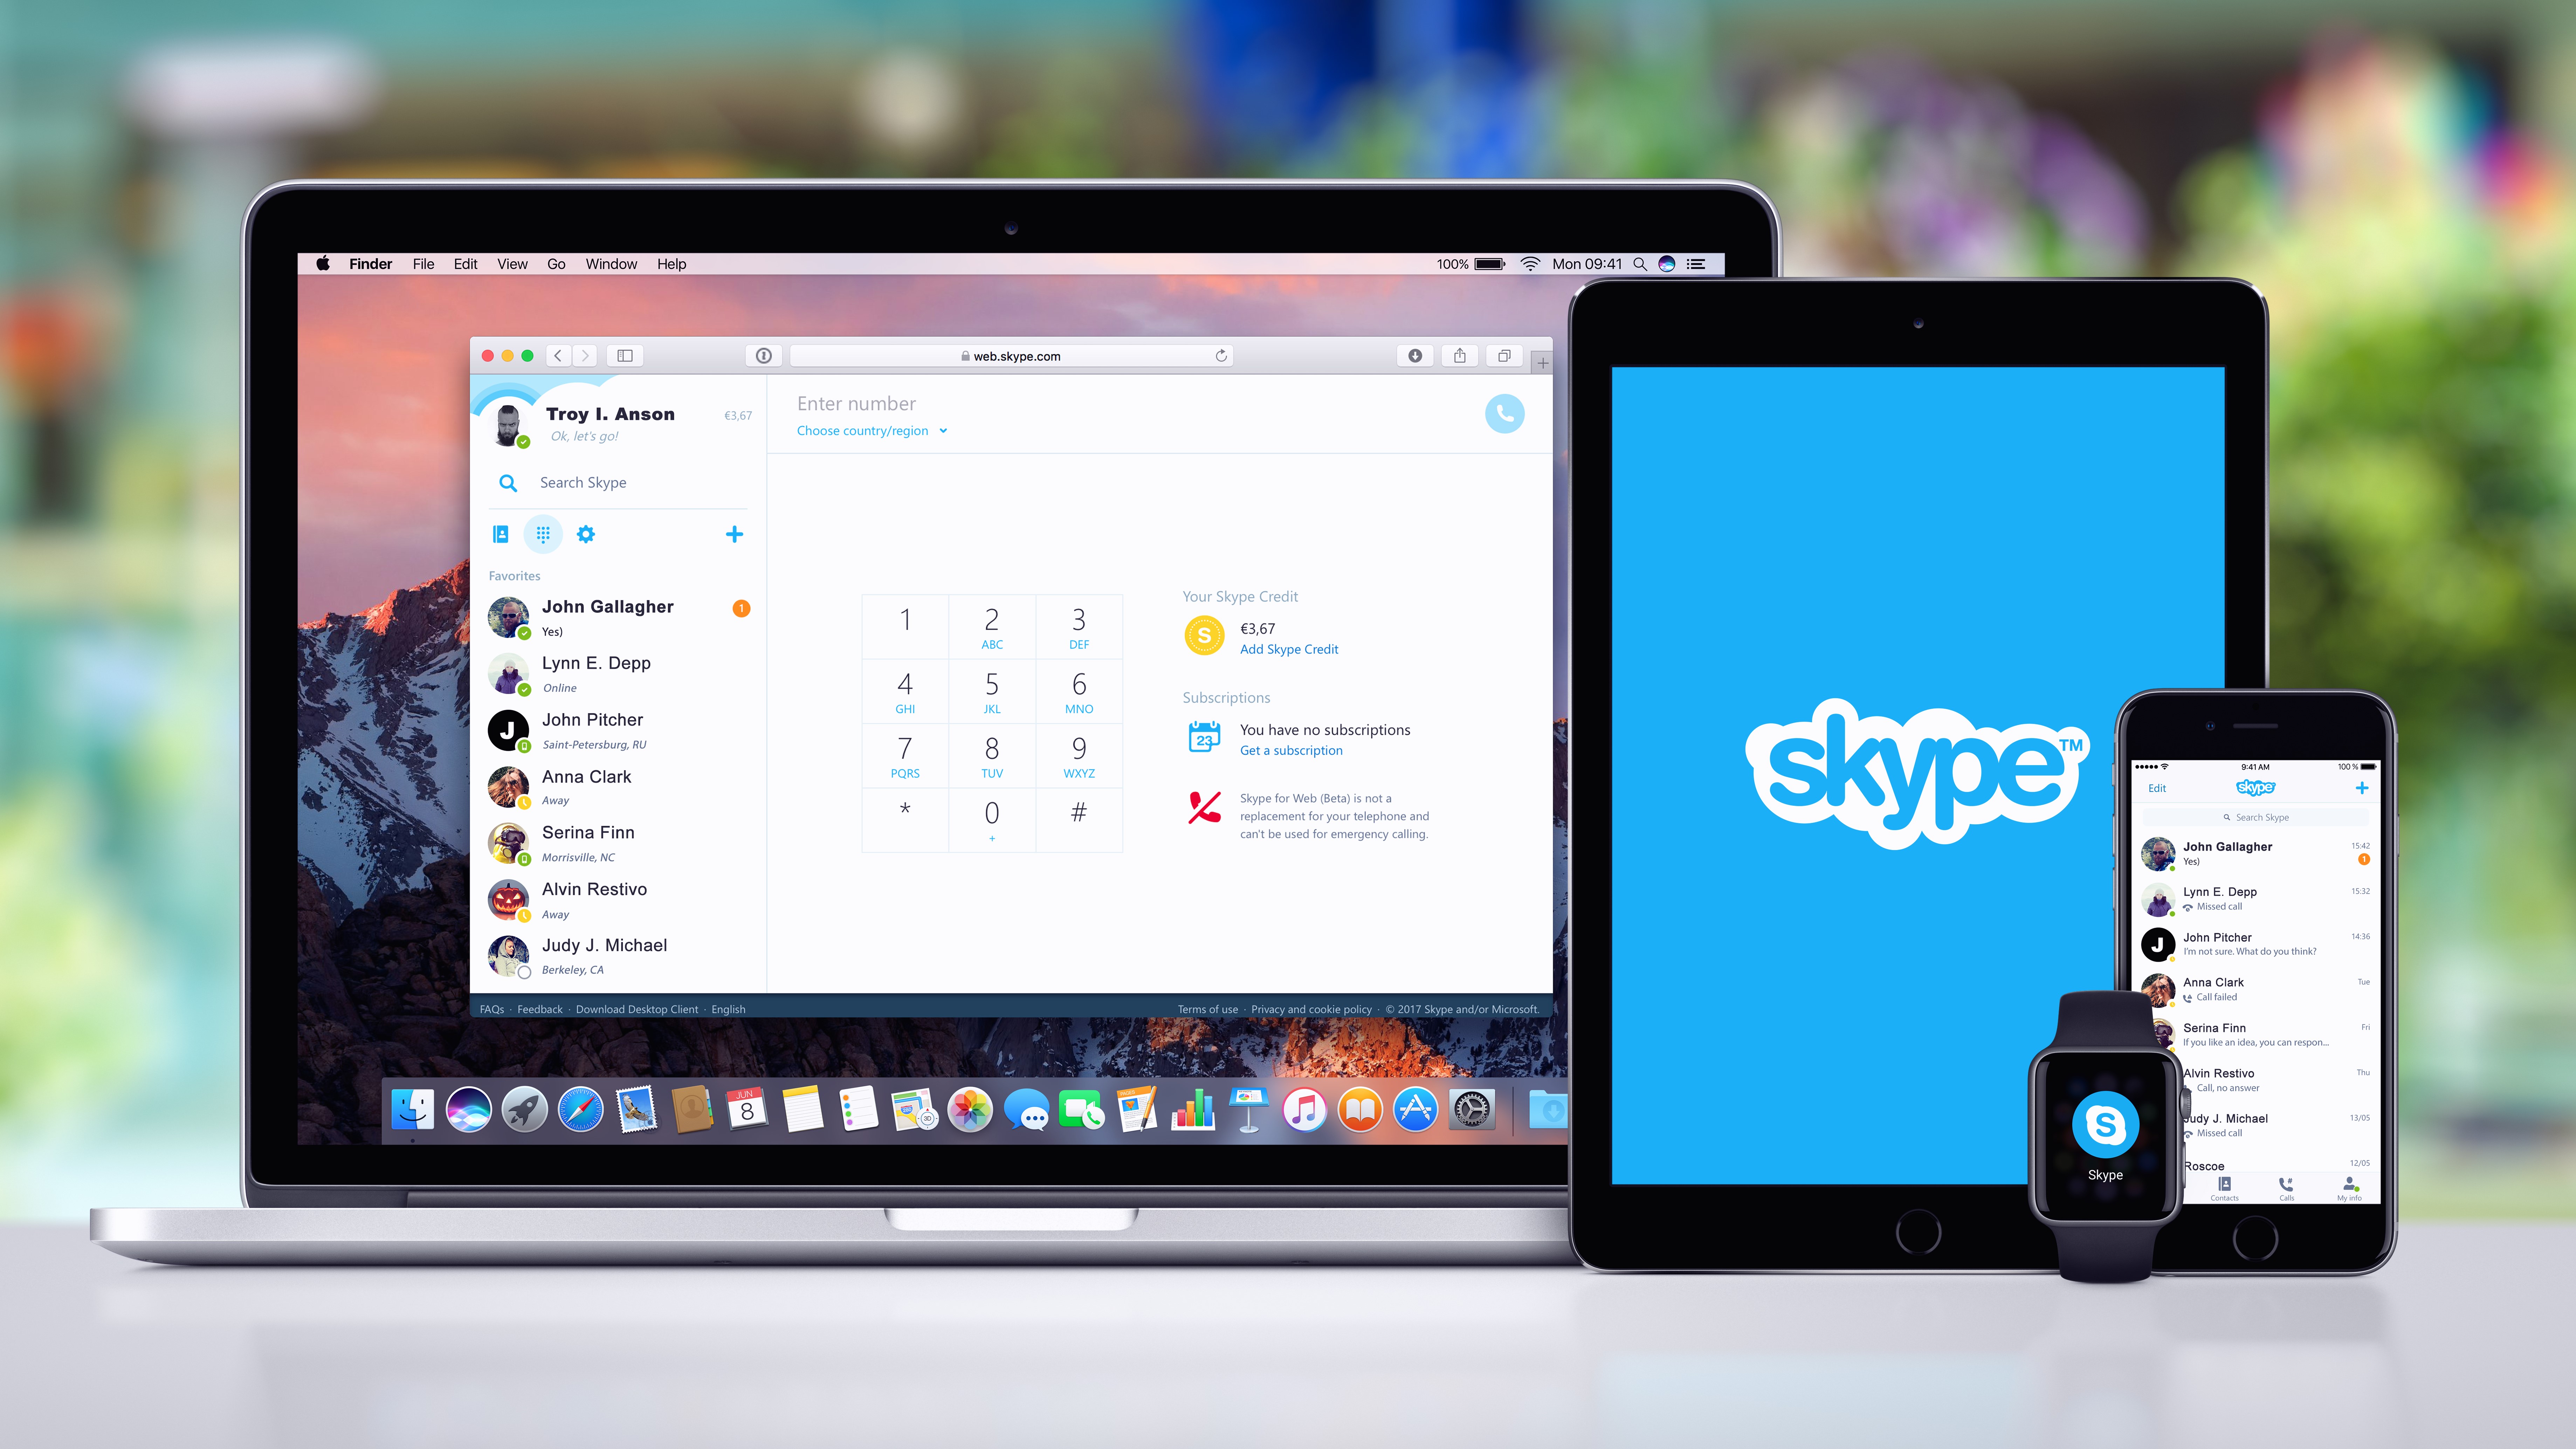 skype to skype call on samsung android